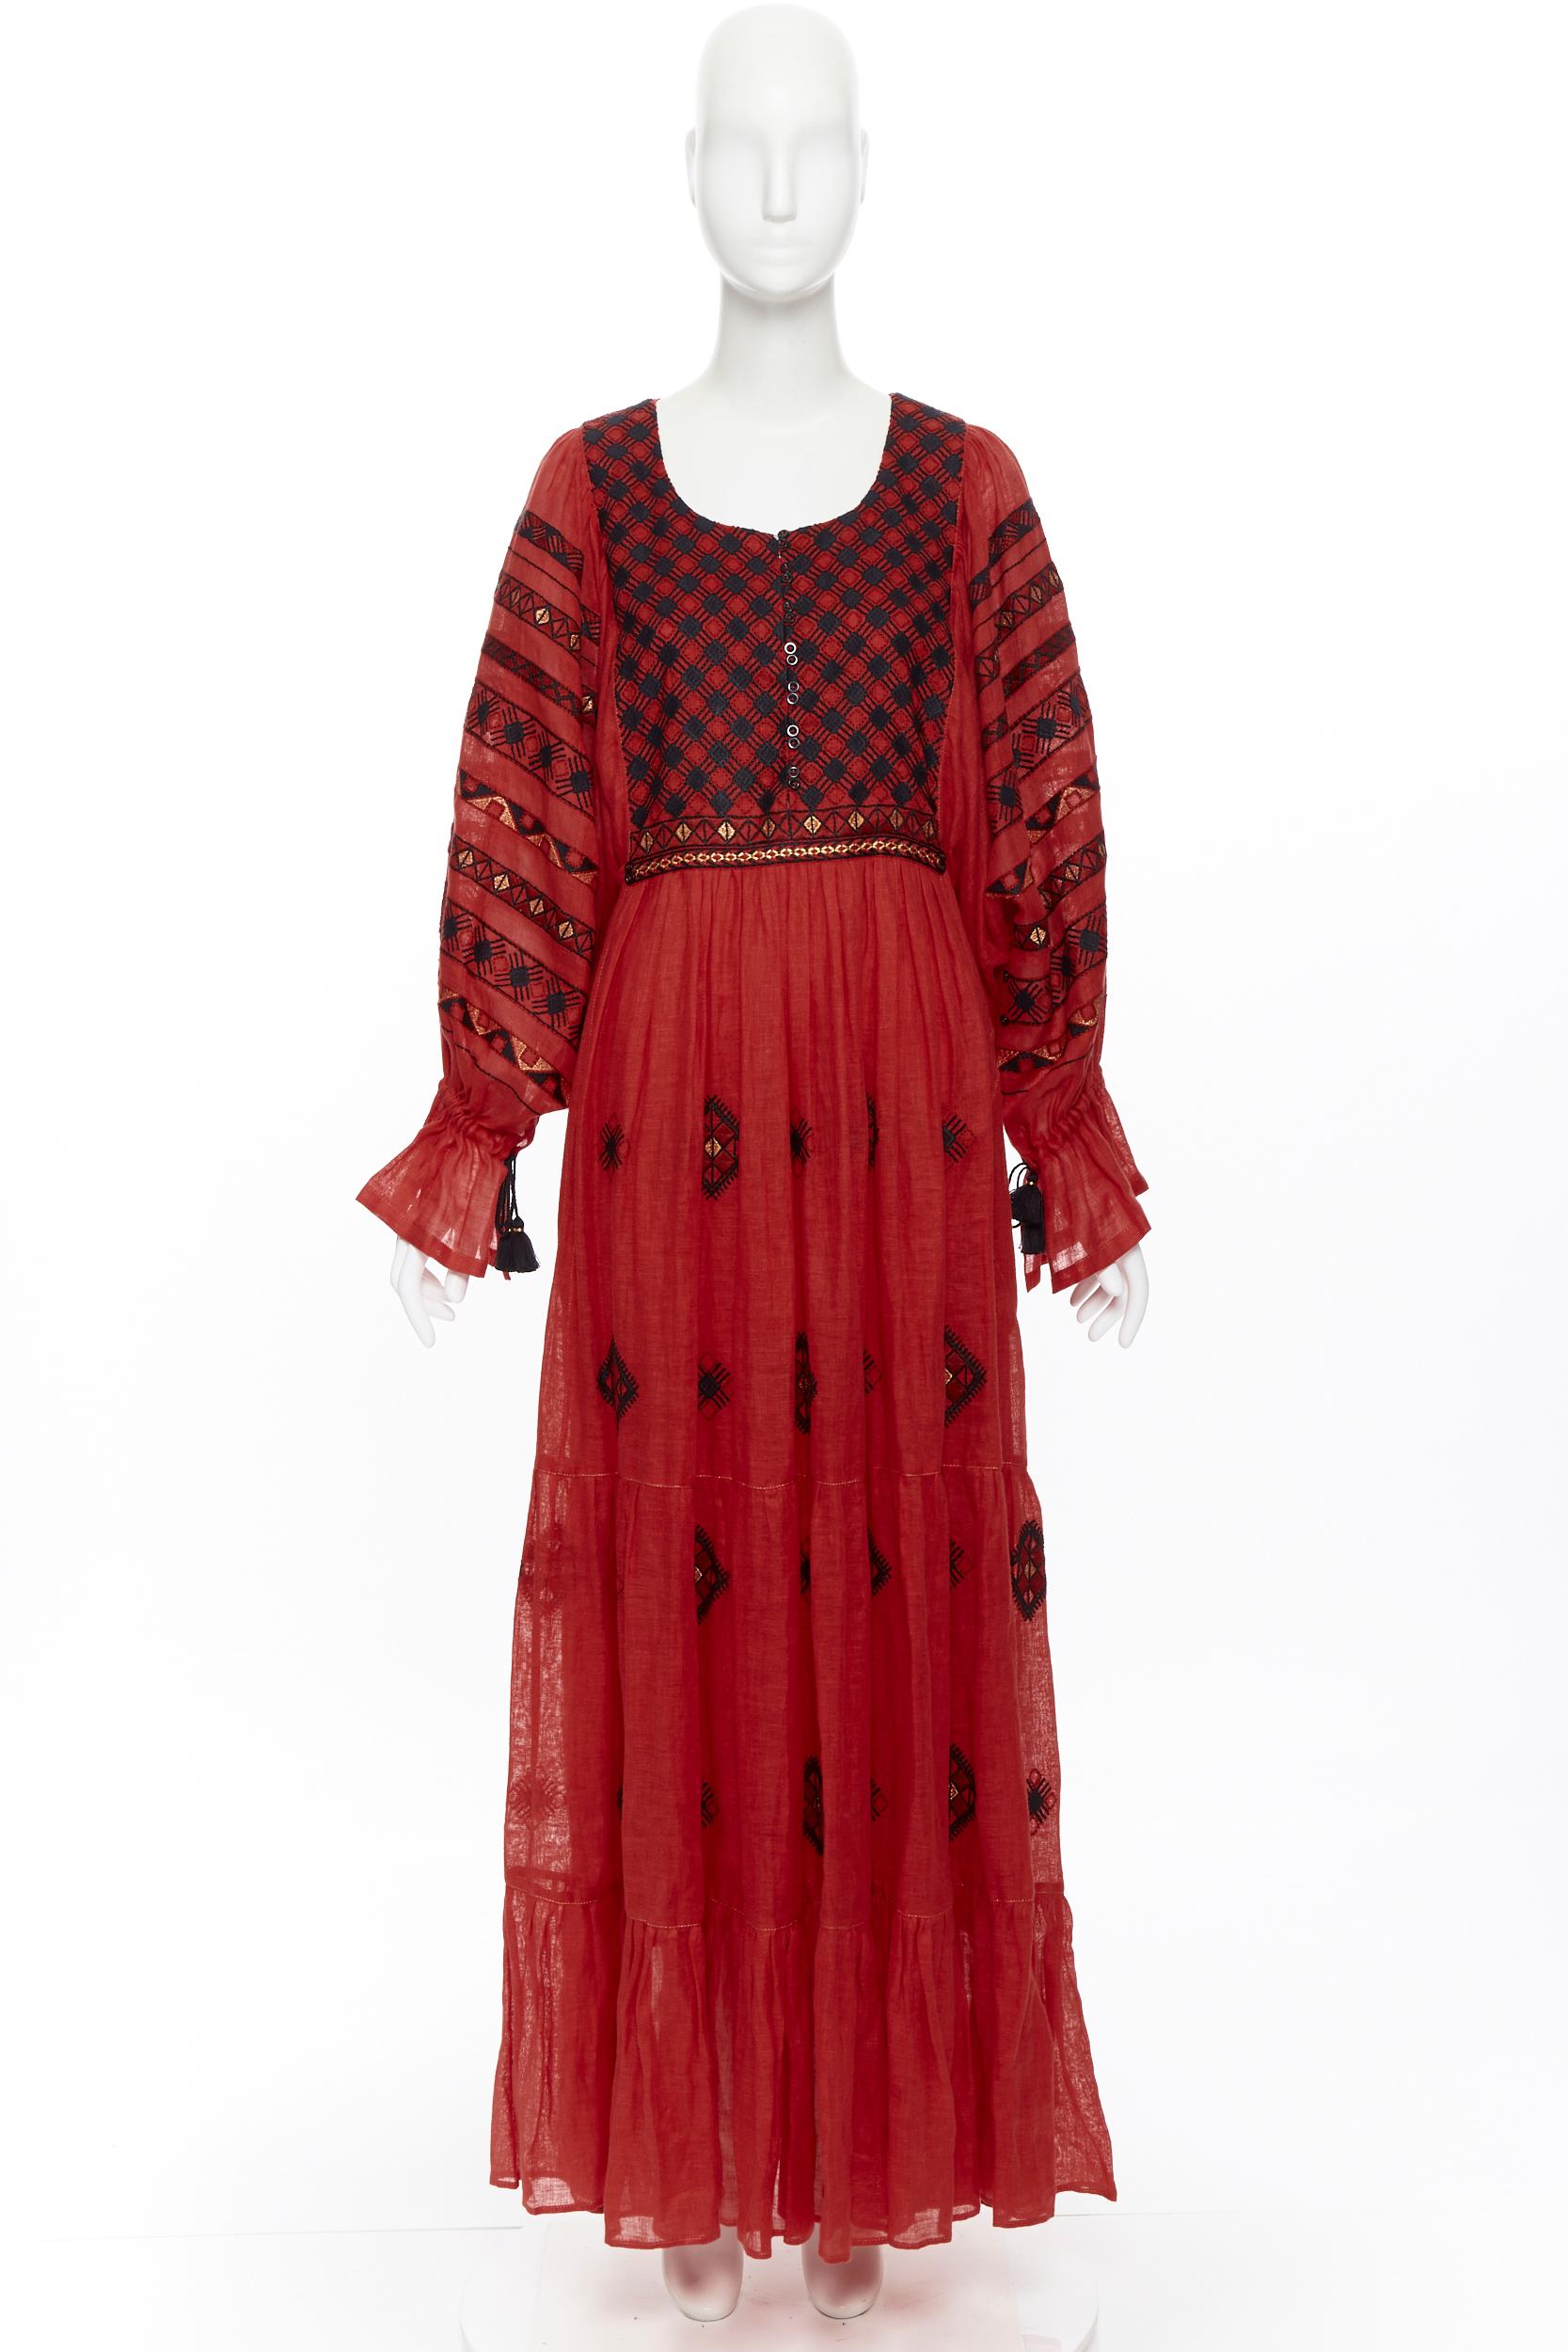 bohemian folk clothing